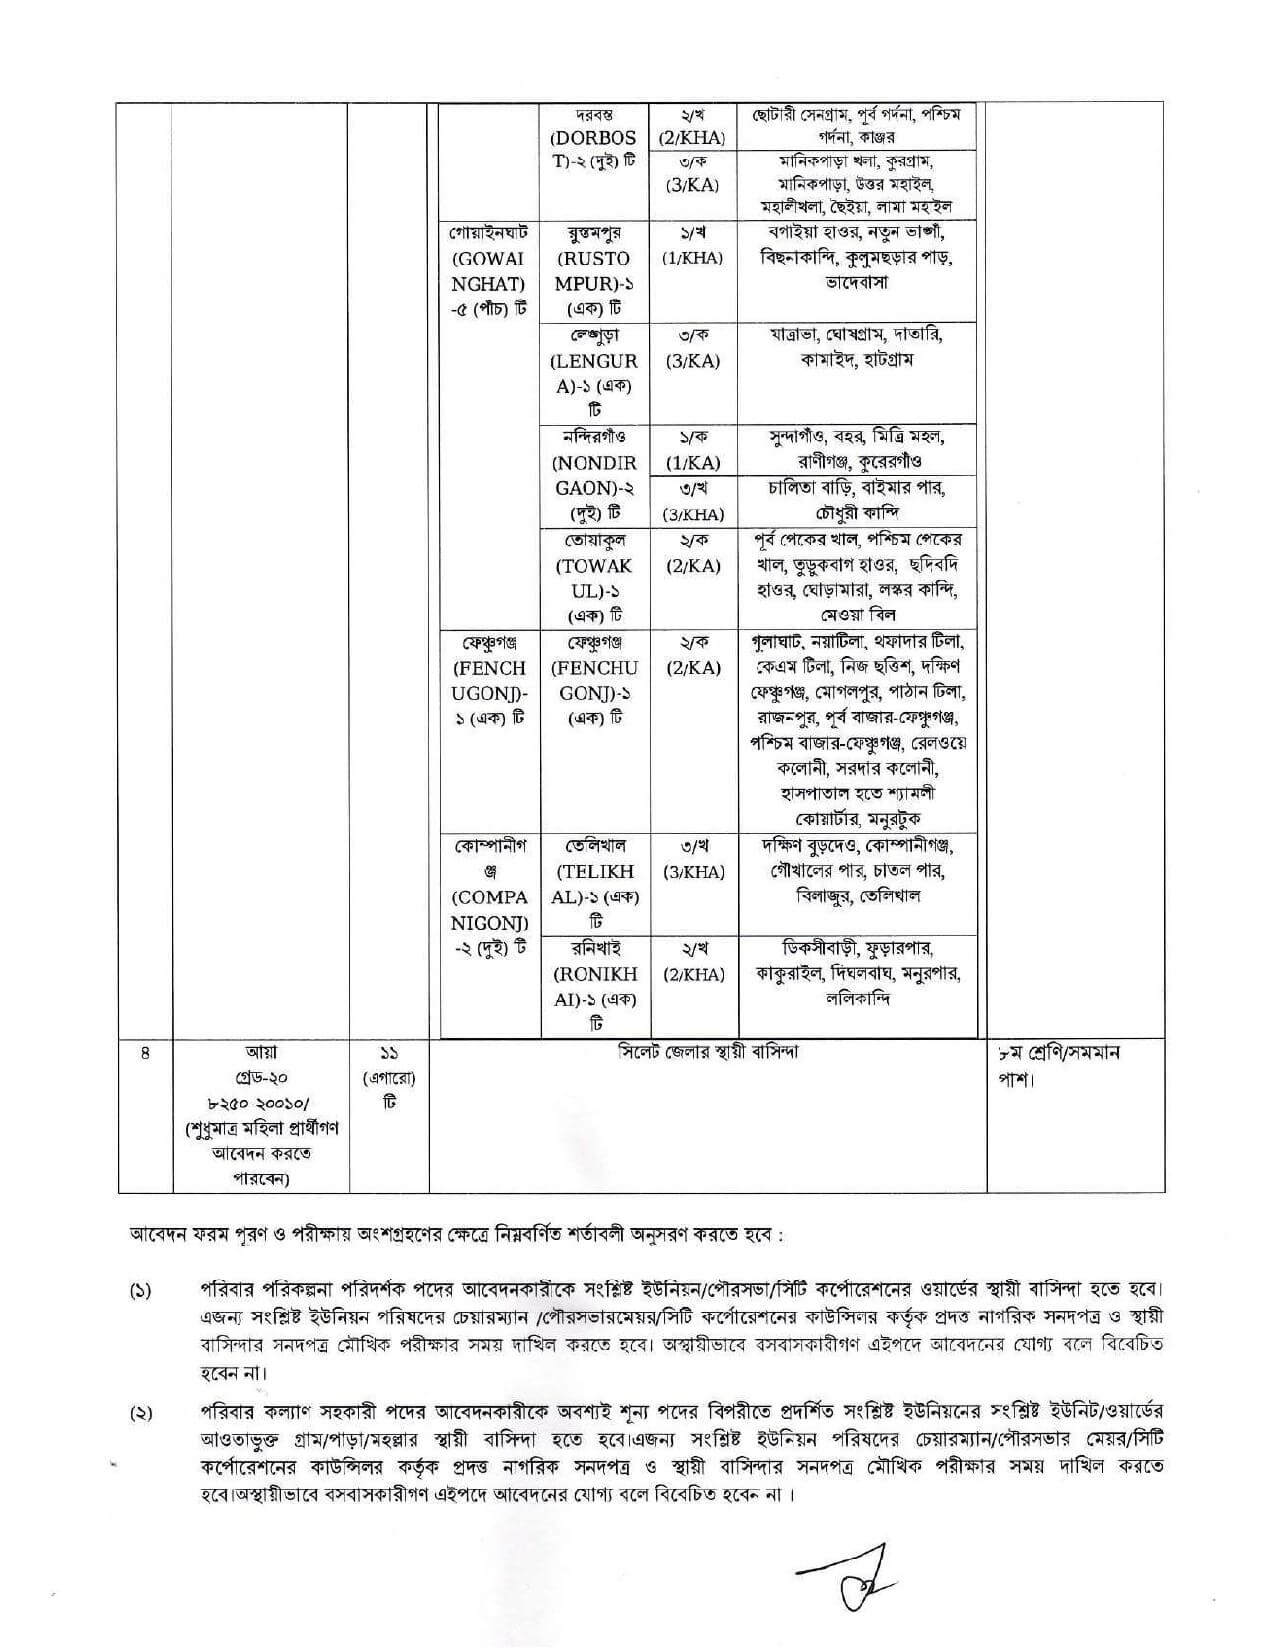 District Family Planning Office Sylhet Job Circular 2021